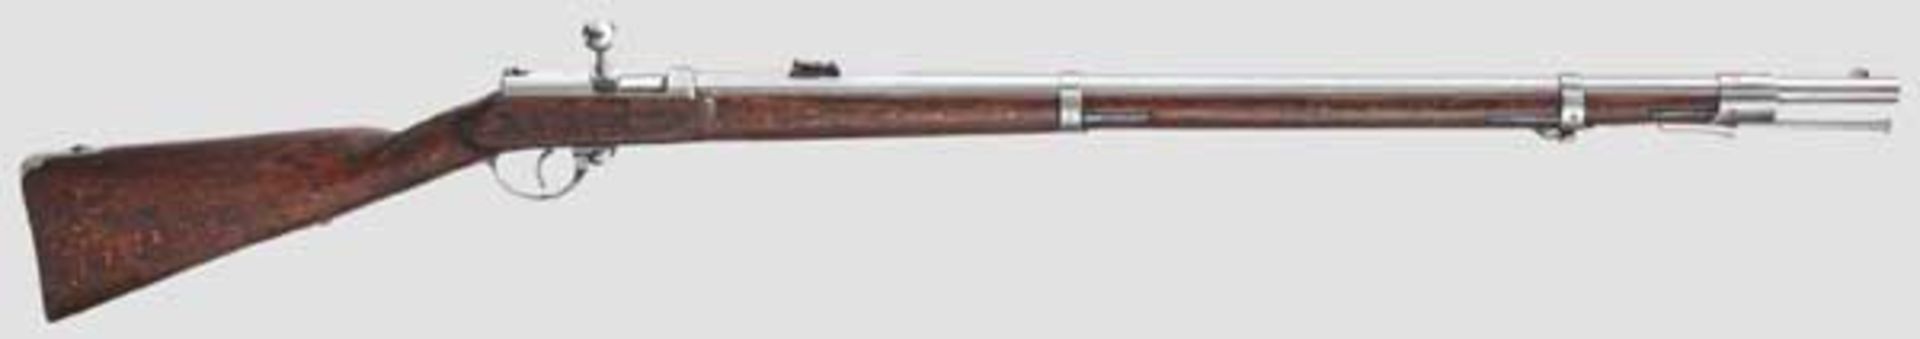 Zündnadel-Defensionsgewehr Ö/M (Österr. Modell), ehem. Infanteriegewehr M 1862 Kaliber 16 mm, Nummer